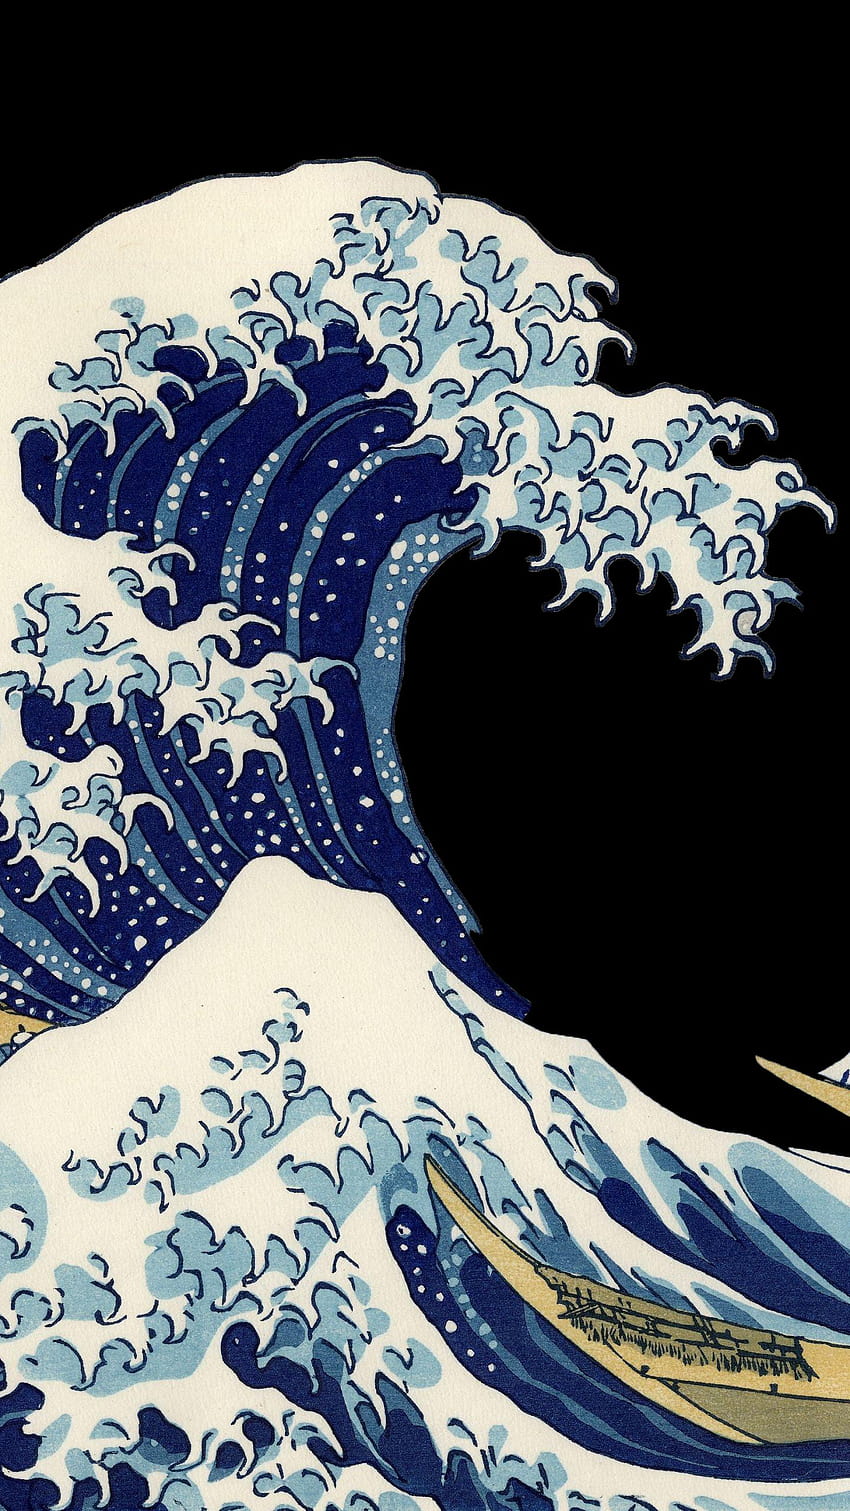 La gran ola de Kanagawa 1920x1080 publicada por Ethan, olas japonesas fondo de pantalla del teléfono